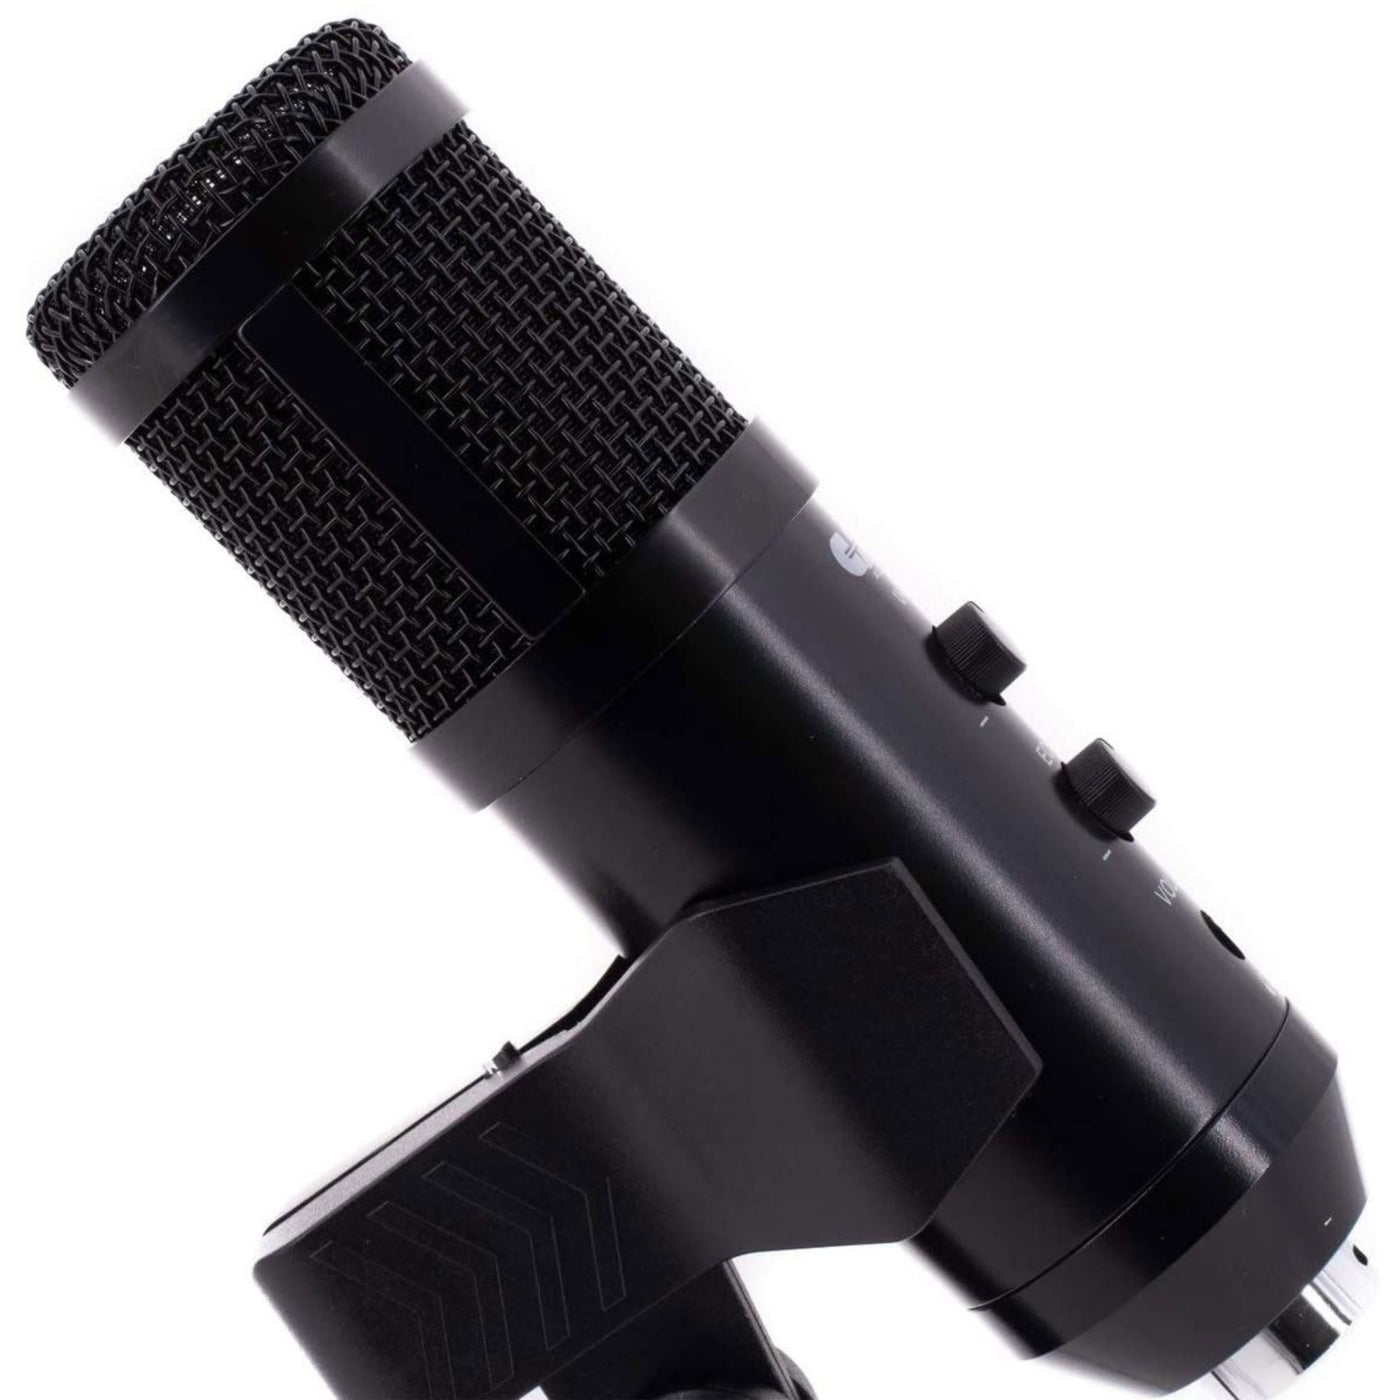 CAD Audio U49 USB Large Format Side Address Studio Microphone with Headphone Monitor and Echo (U49)